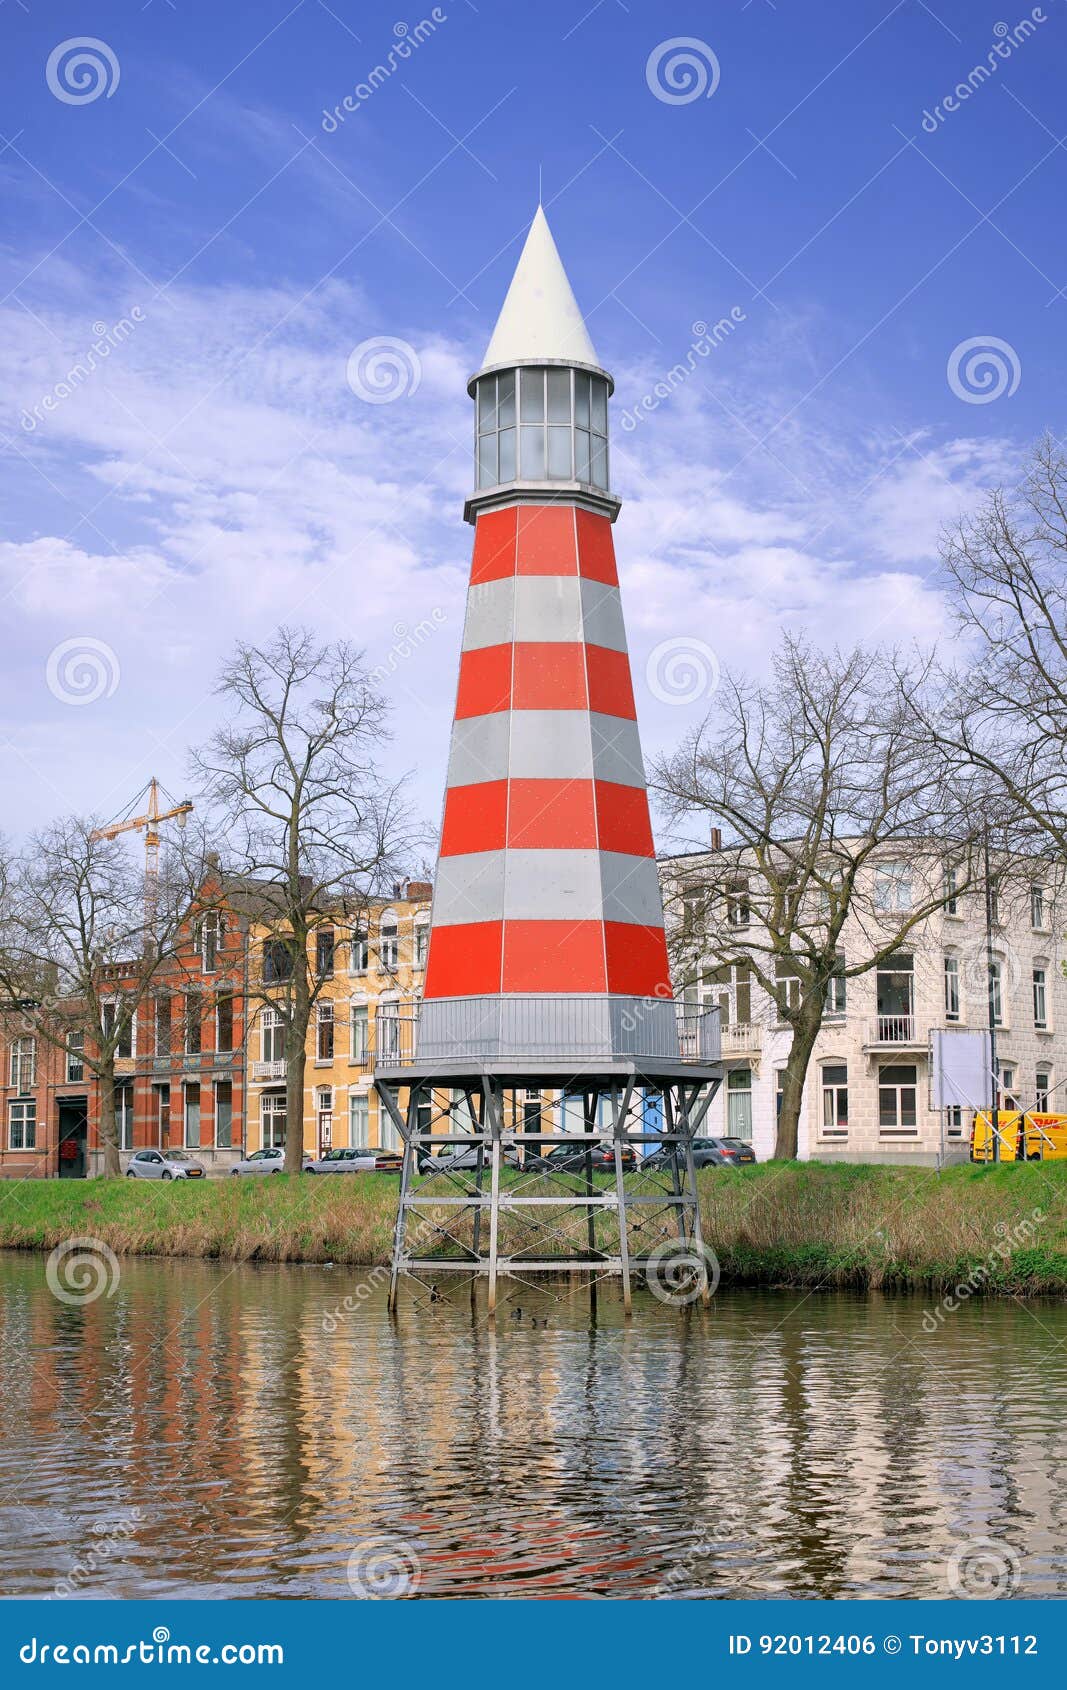 specifikation Beloved maling The Lighthouse, Artwork Designed by Aldo Rossi, Breda, Netherlands  Editorial Photo - Image of embankment, europe: 92012406